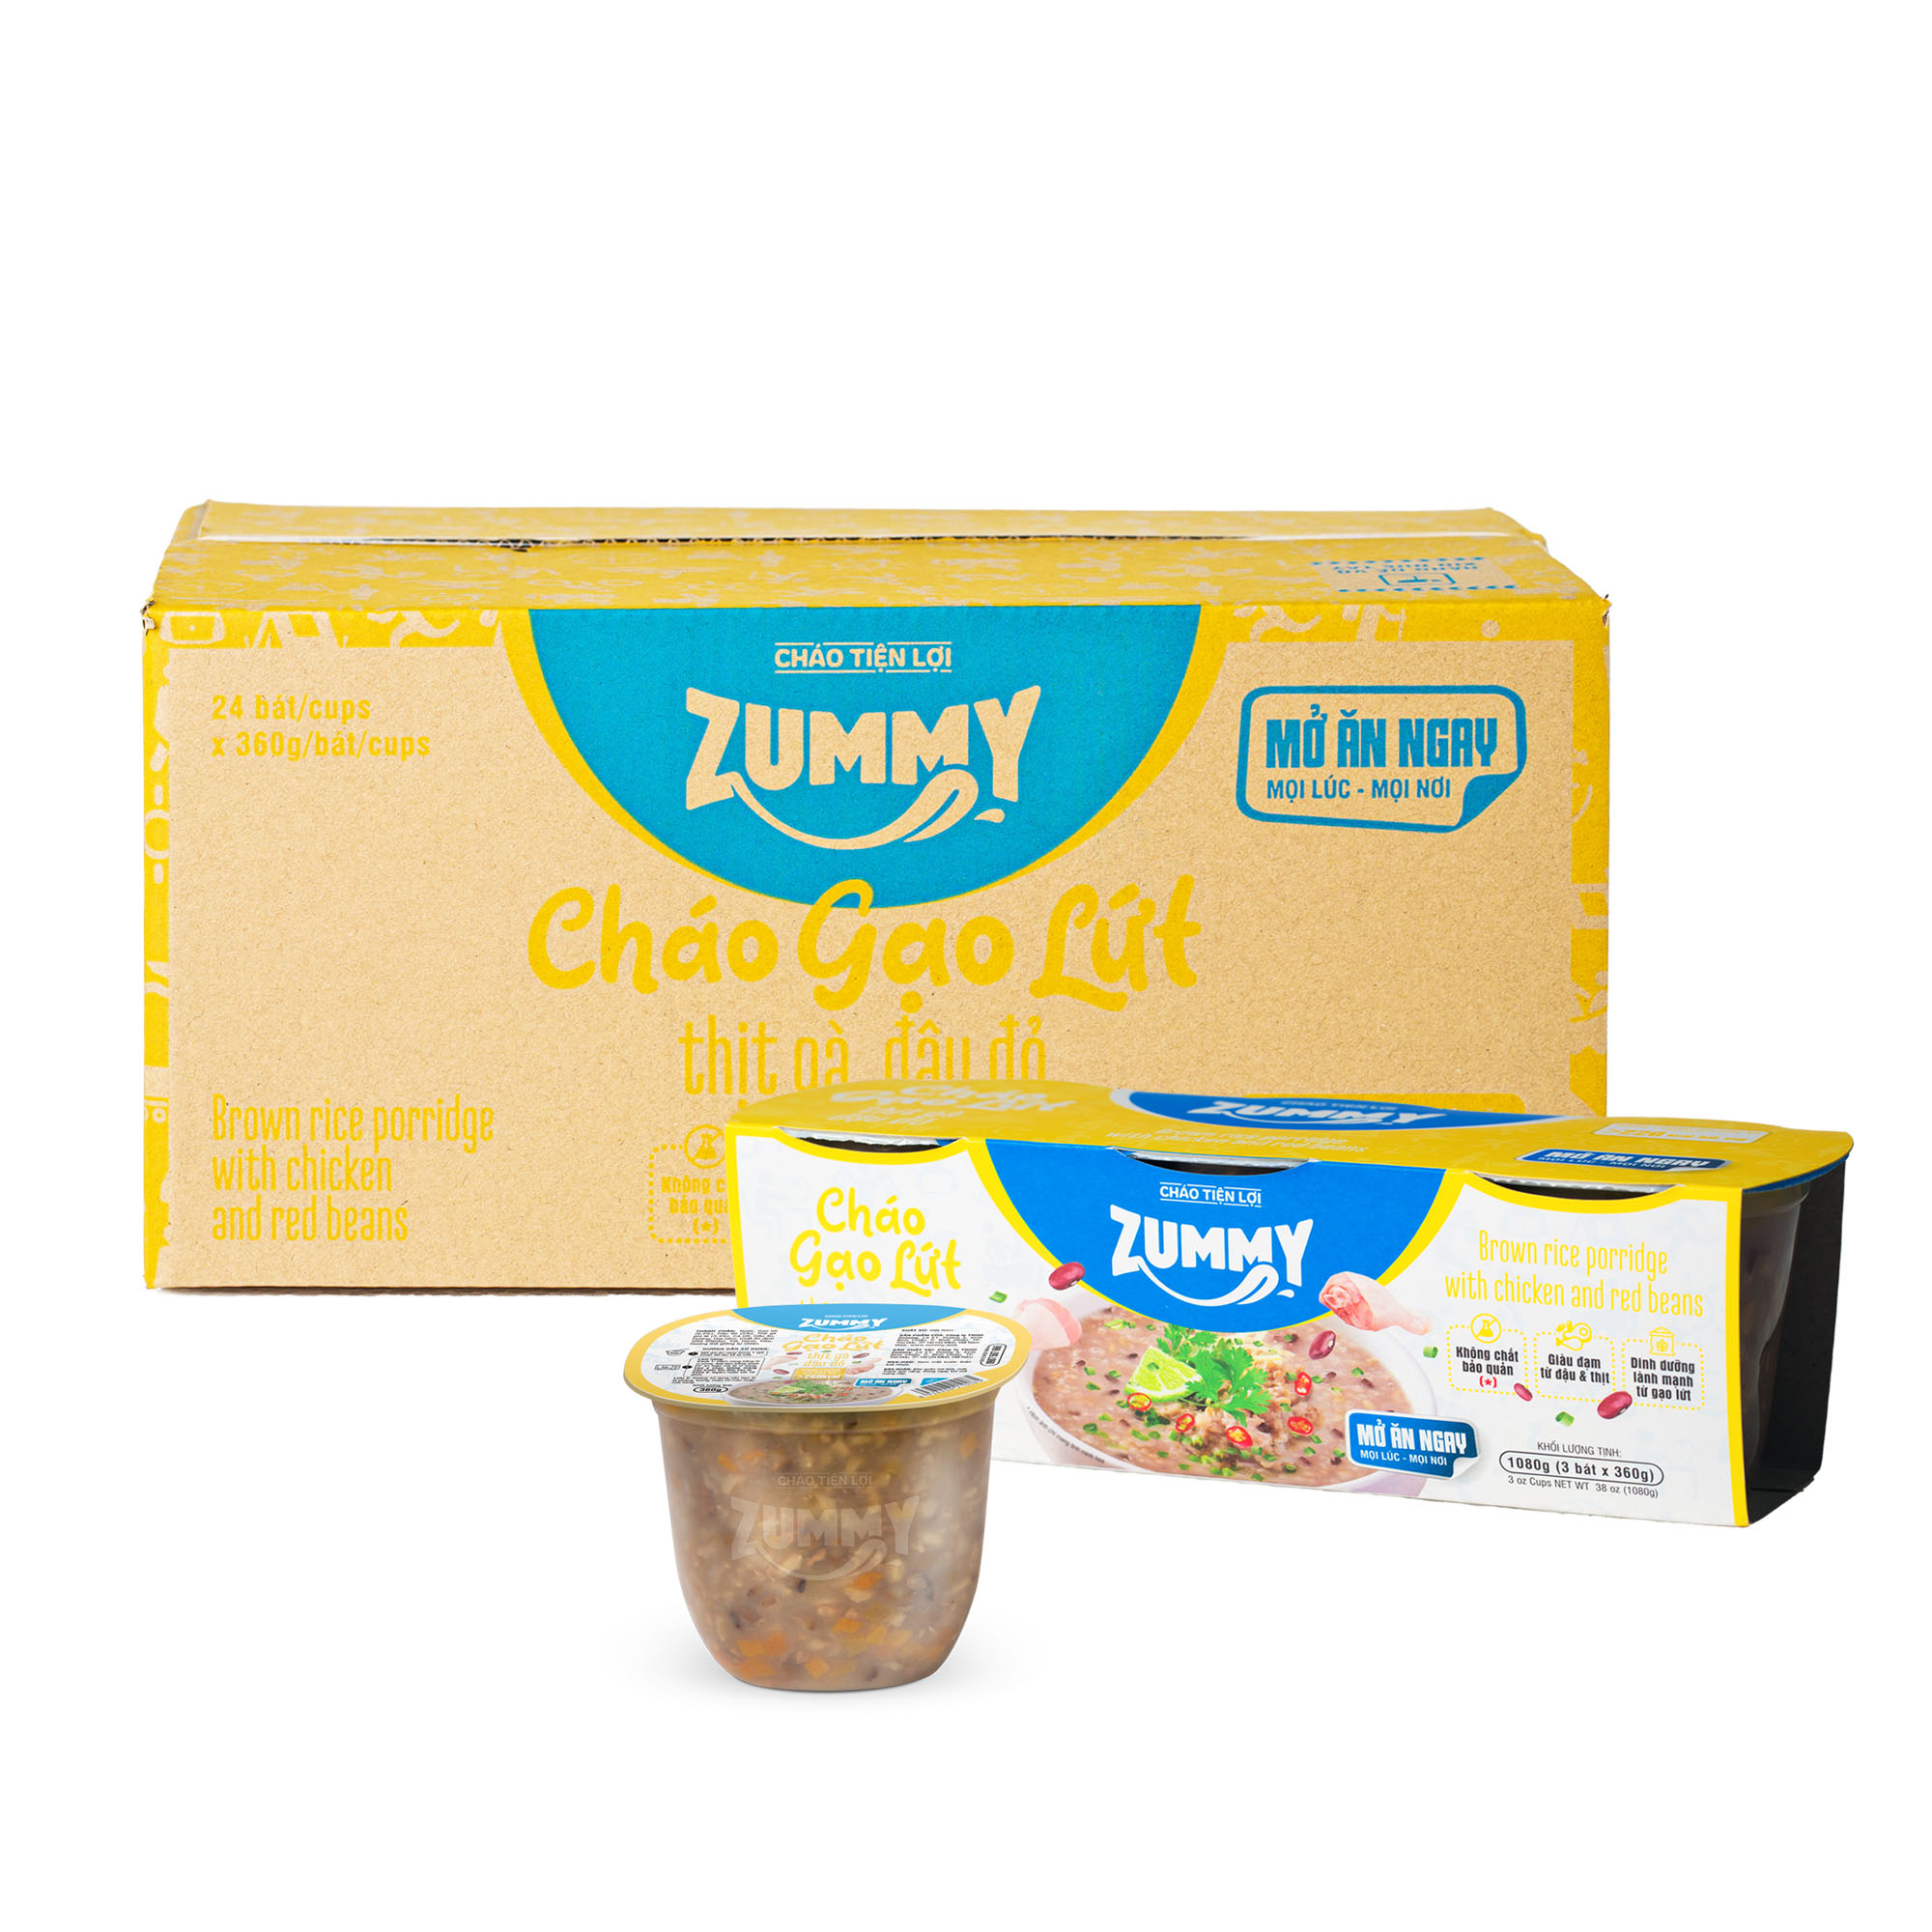  Zummy's Porridge - Brown rice porridge with chicken and red beans (Box 24 cups) 